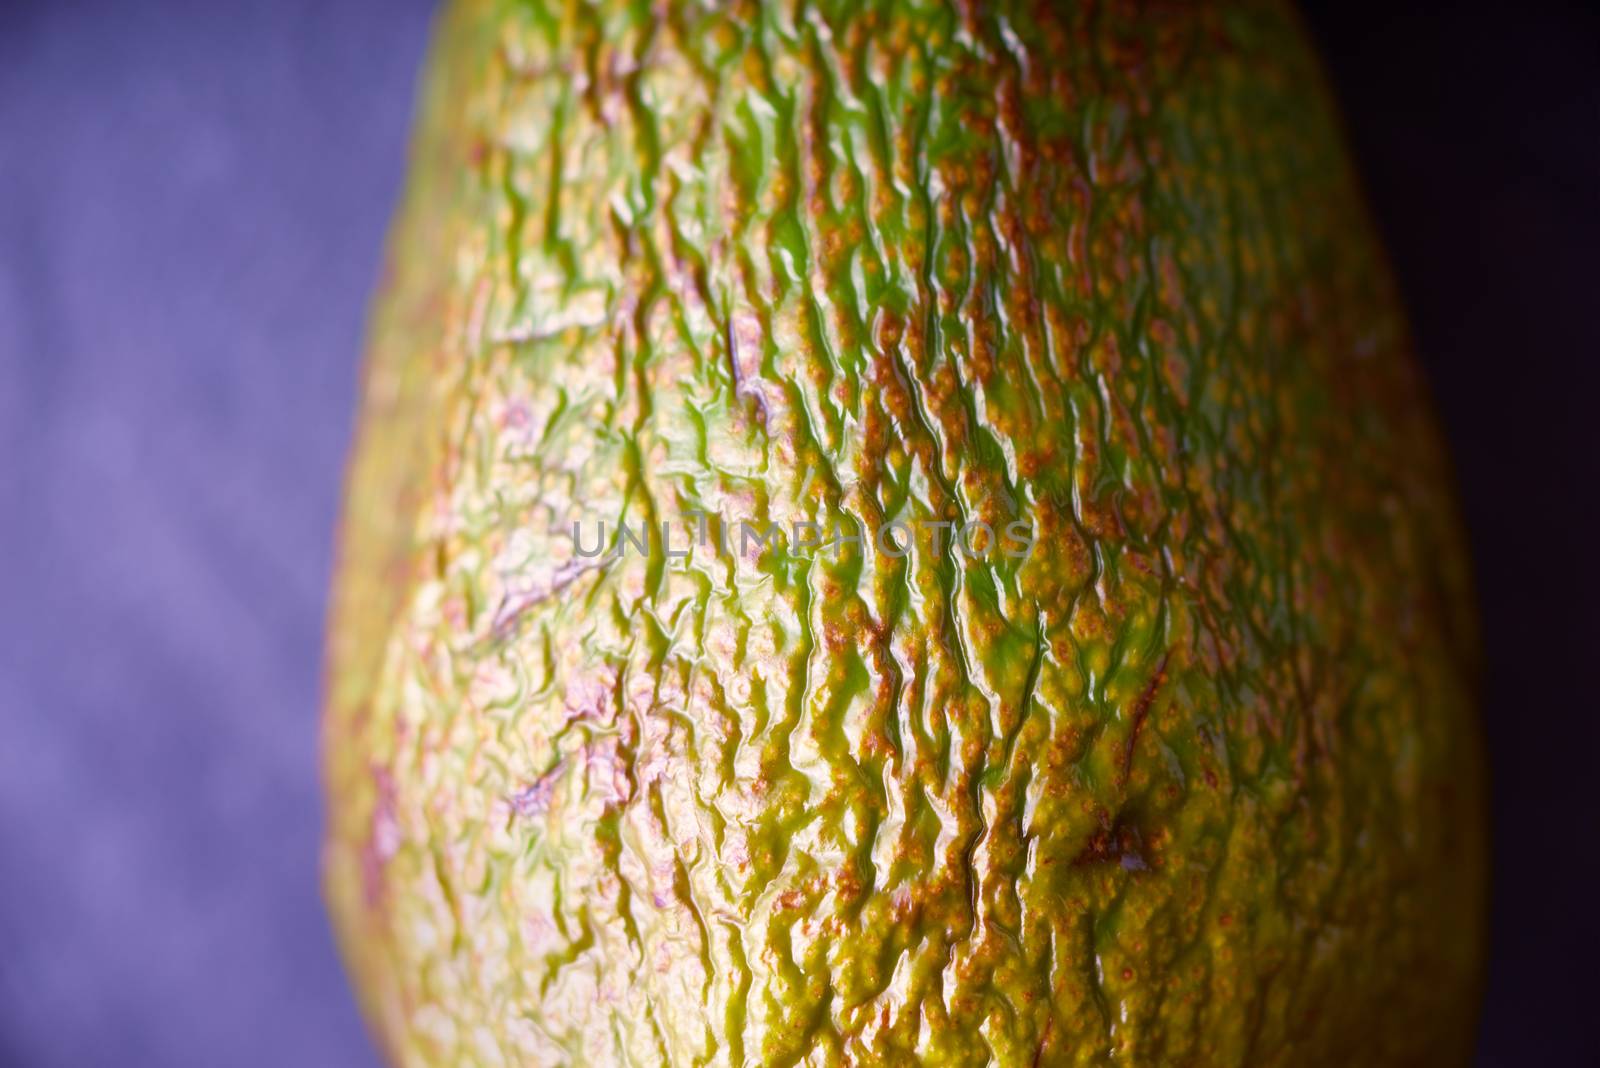 Avocado with relief peel on the purple background by Deniskarpenkov